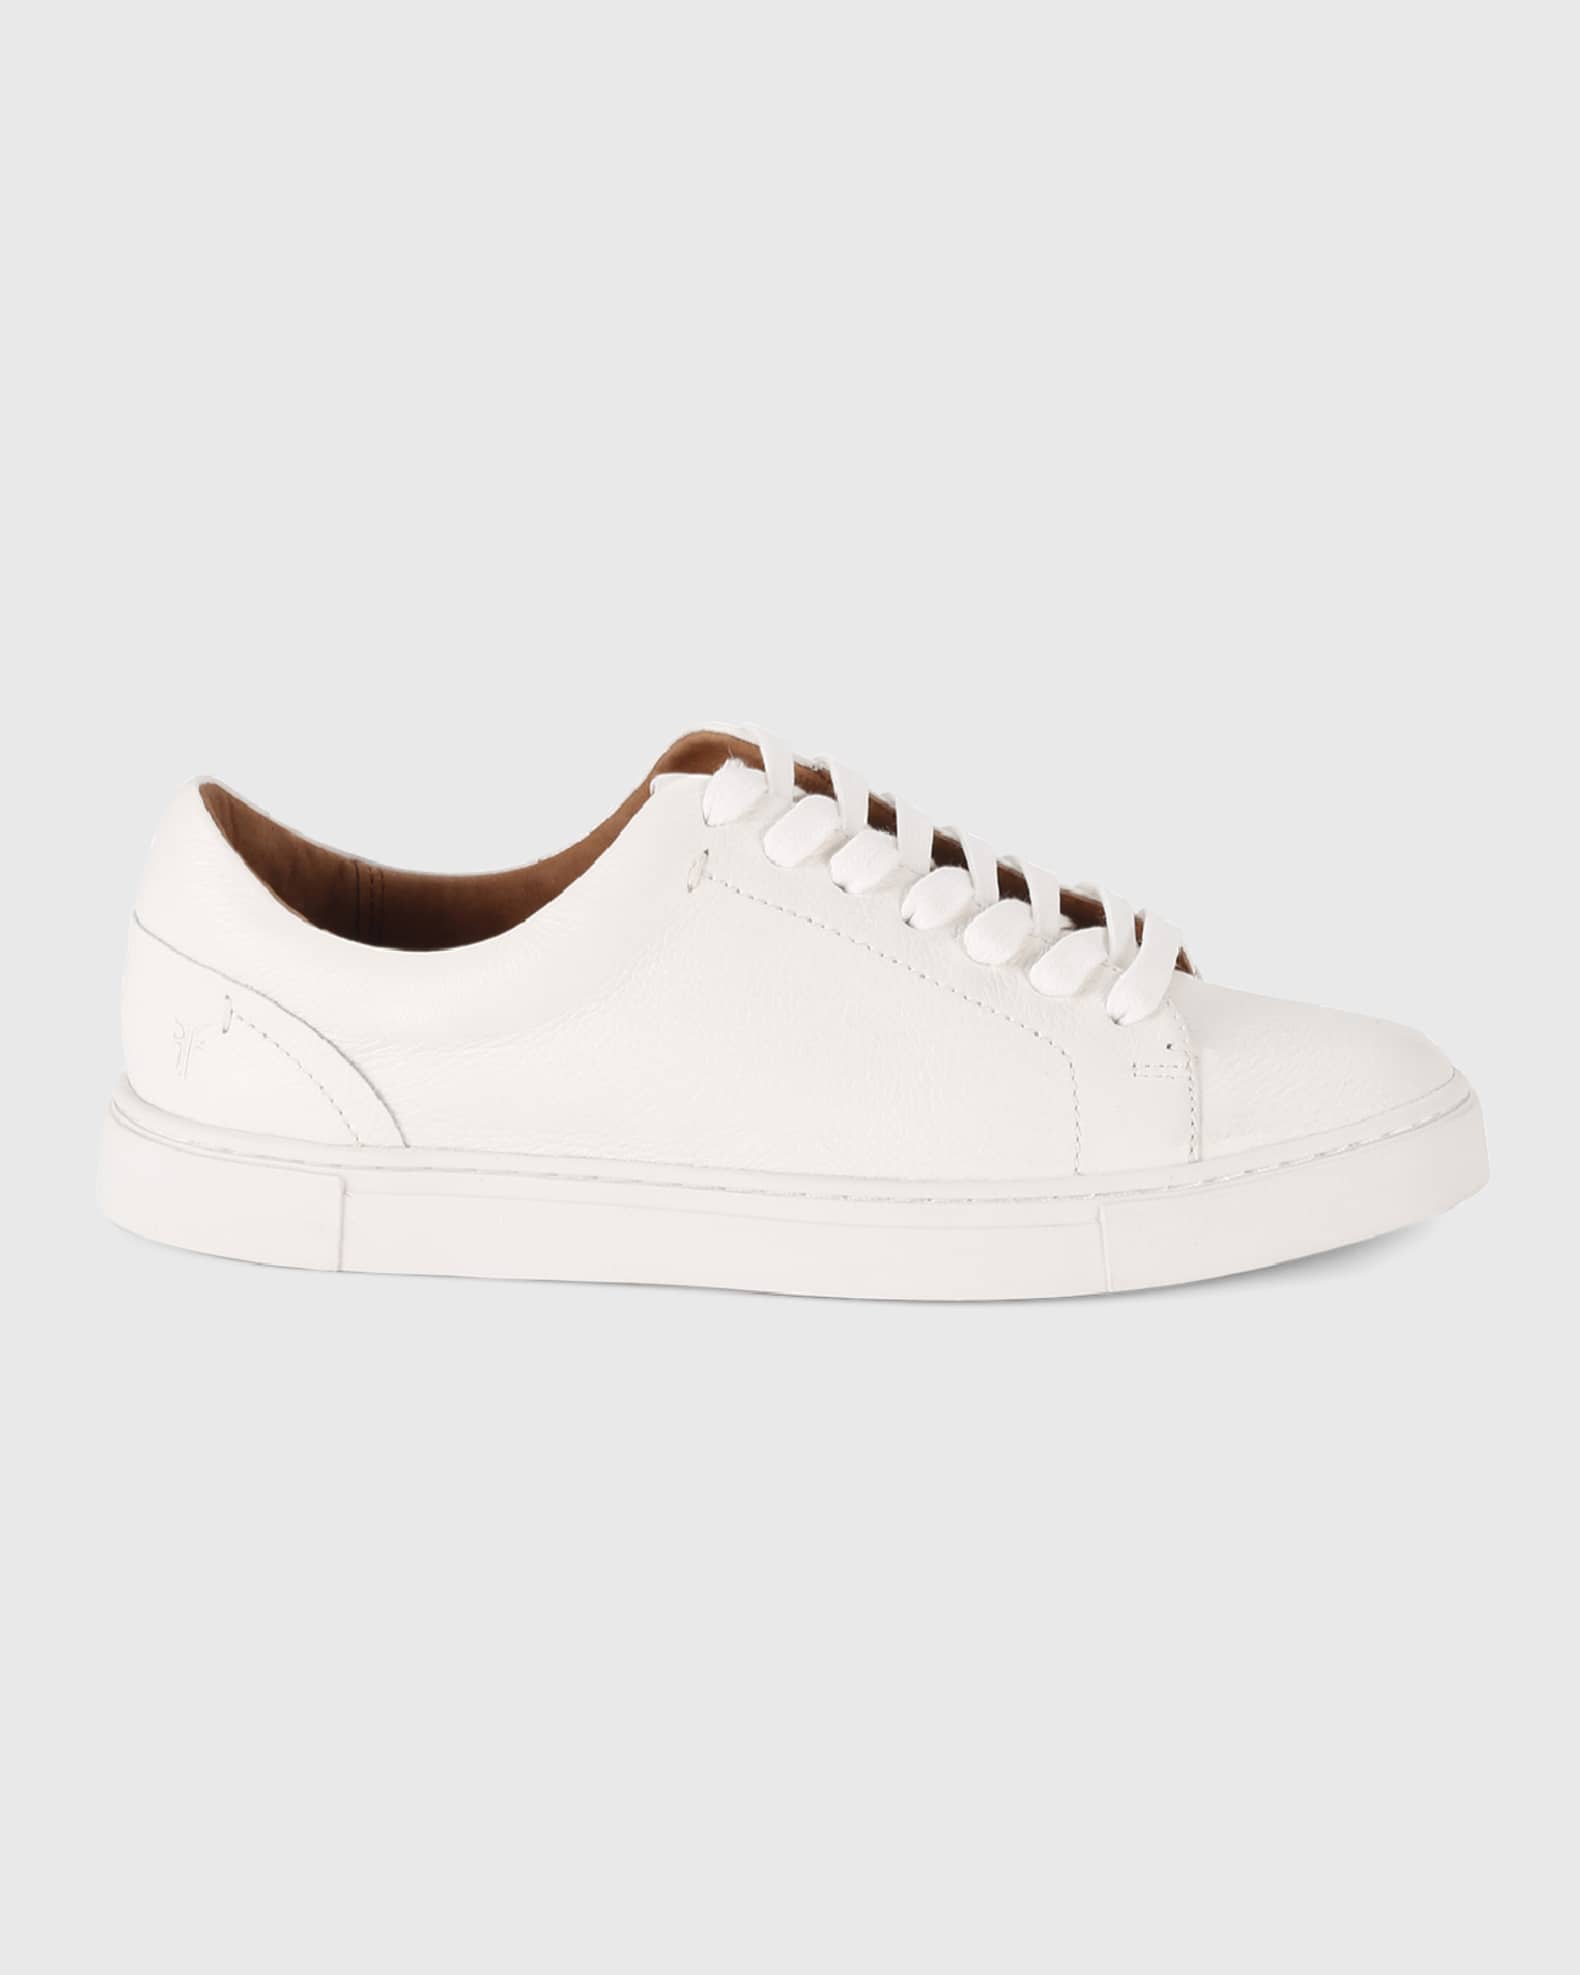 Frye Ivy Leather Low-Top Sneakers | Neiman Marcus